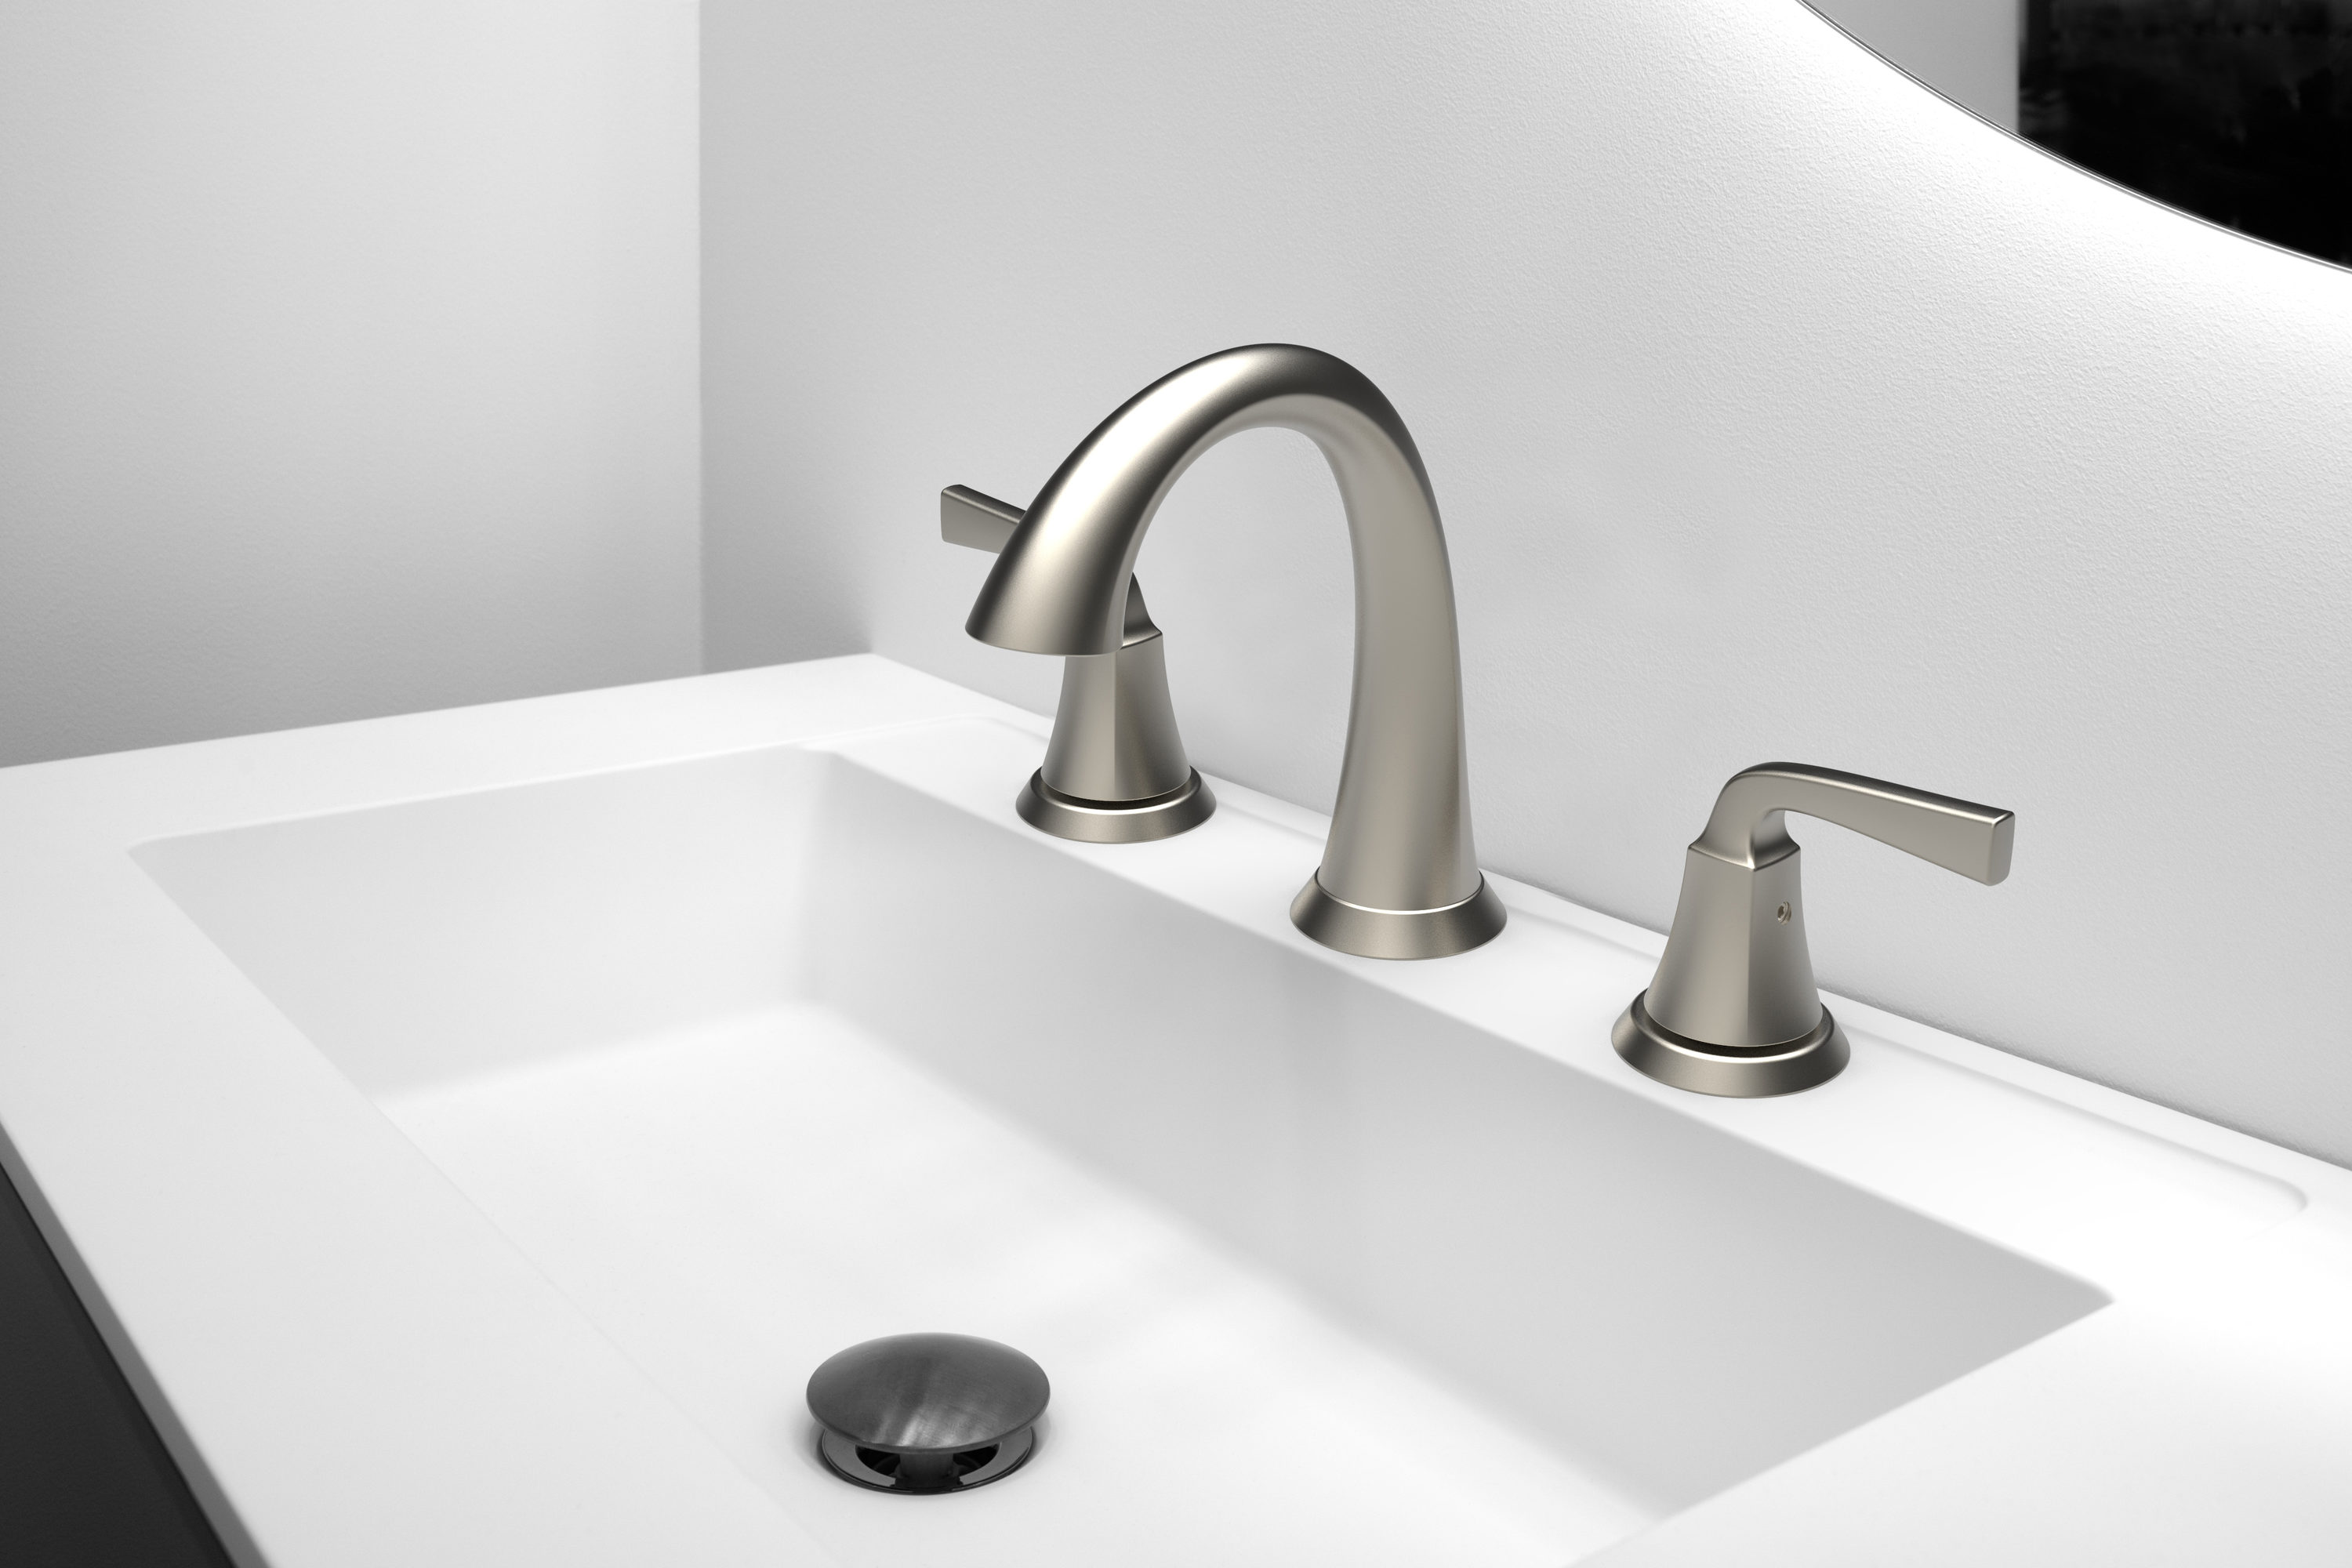 allen + roth Mullen Brushed Nickel 2-handle Widespread WaterSense High-arc Bathroom Sink Faucet with Drain